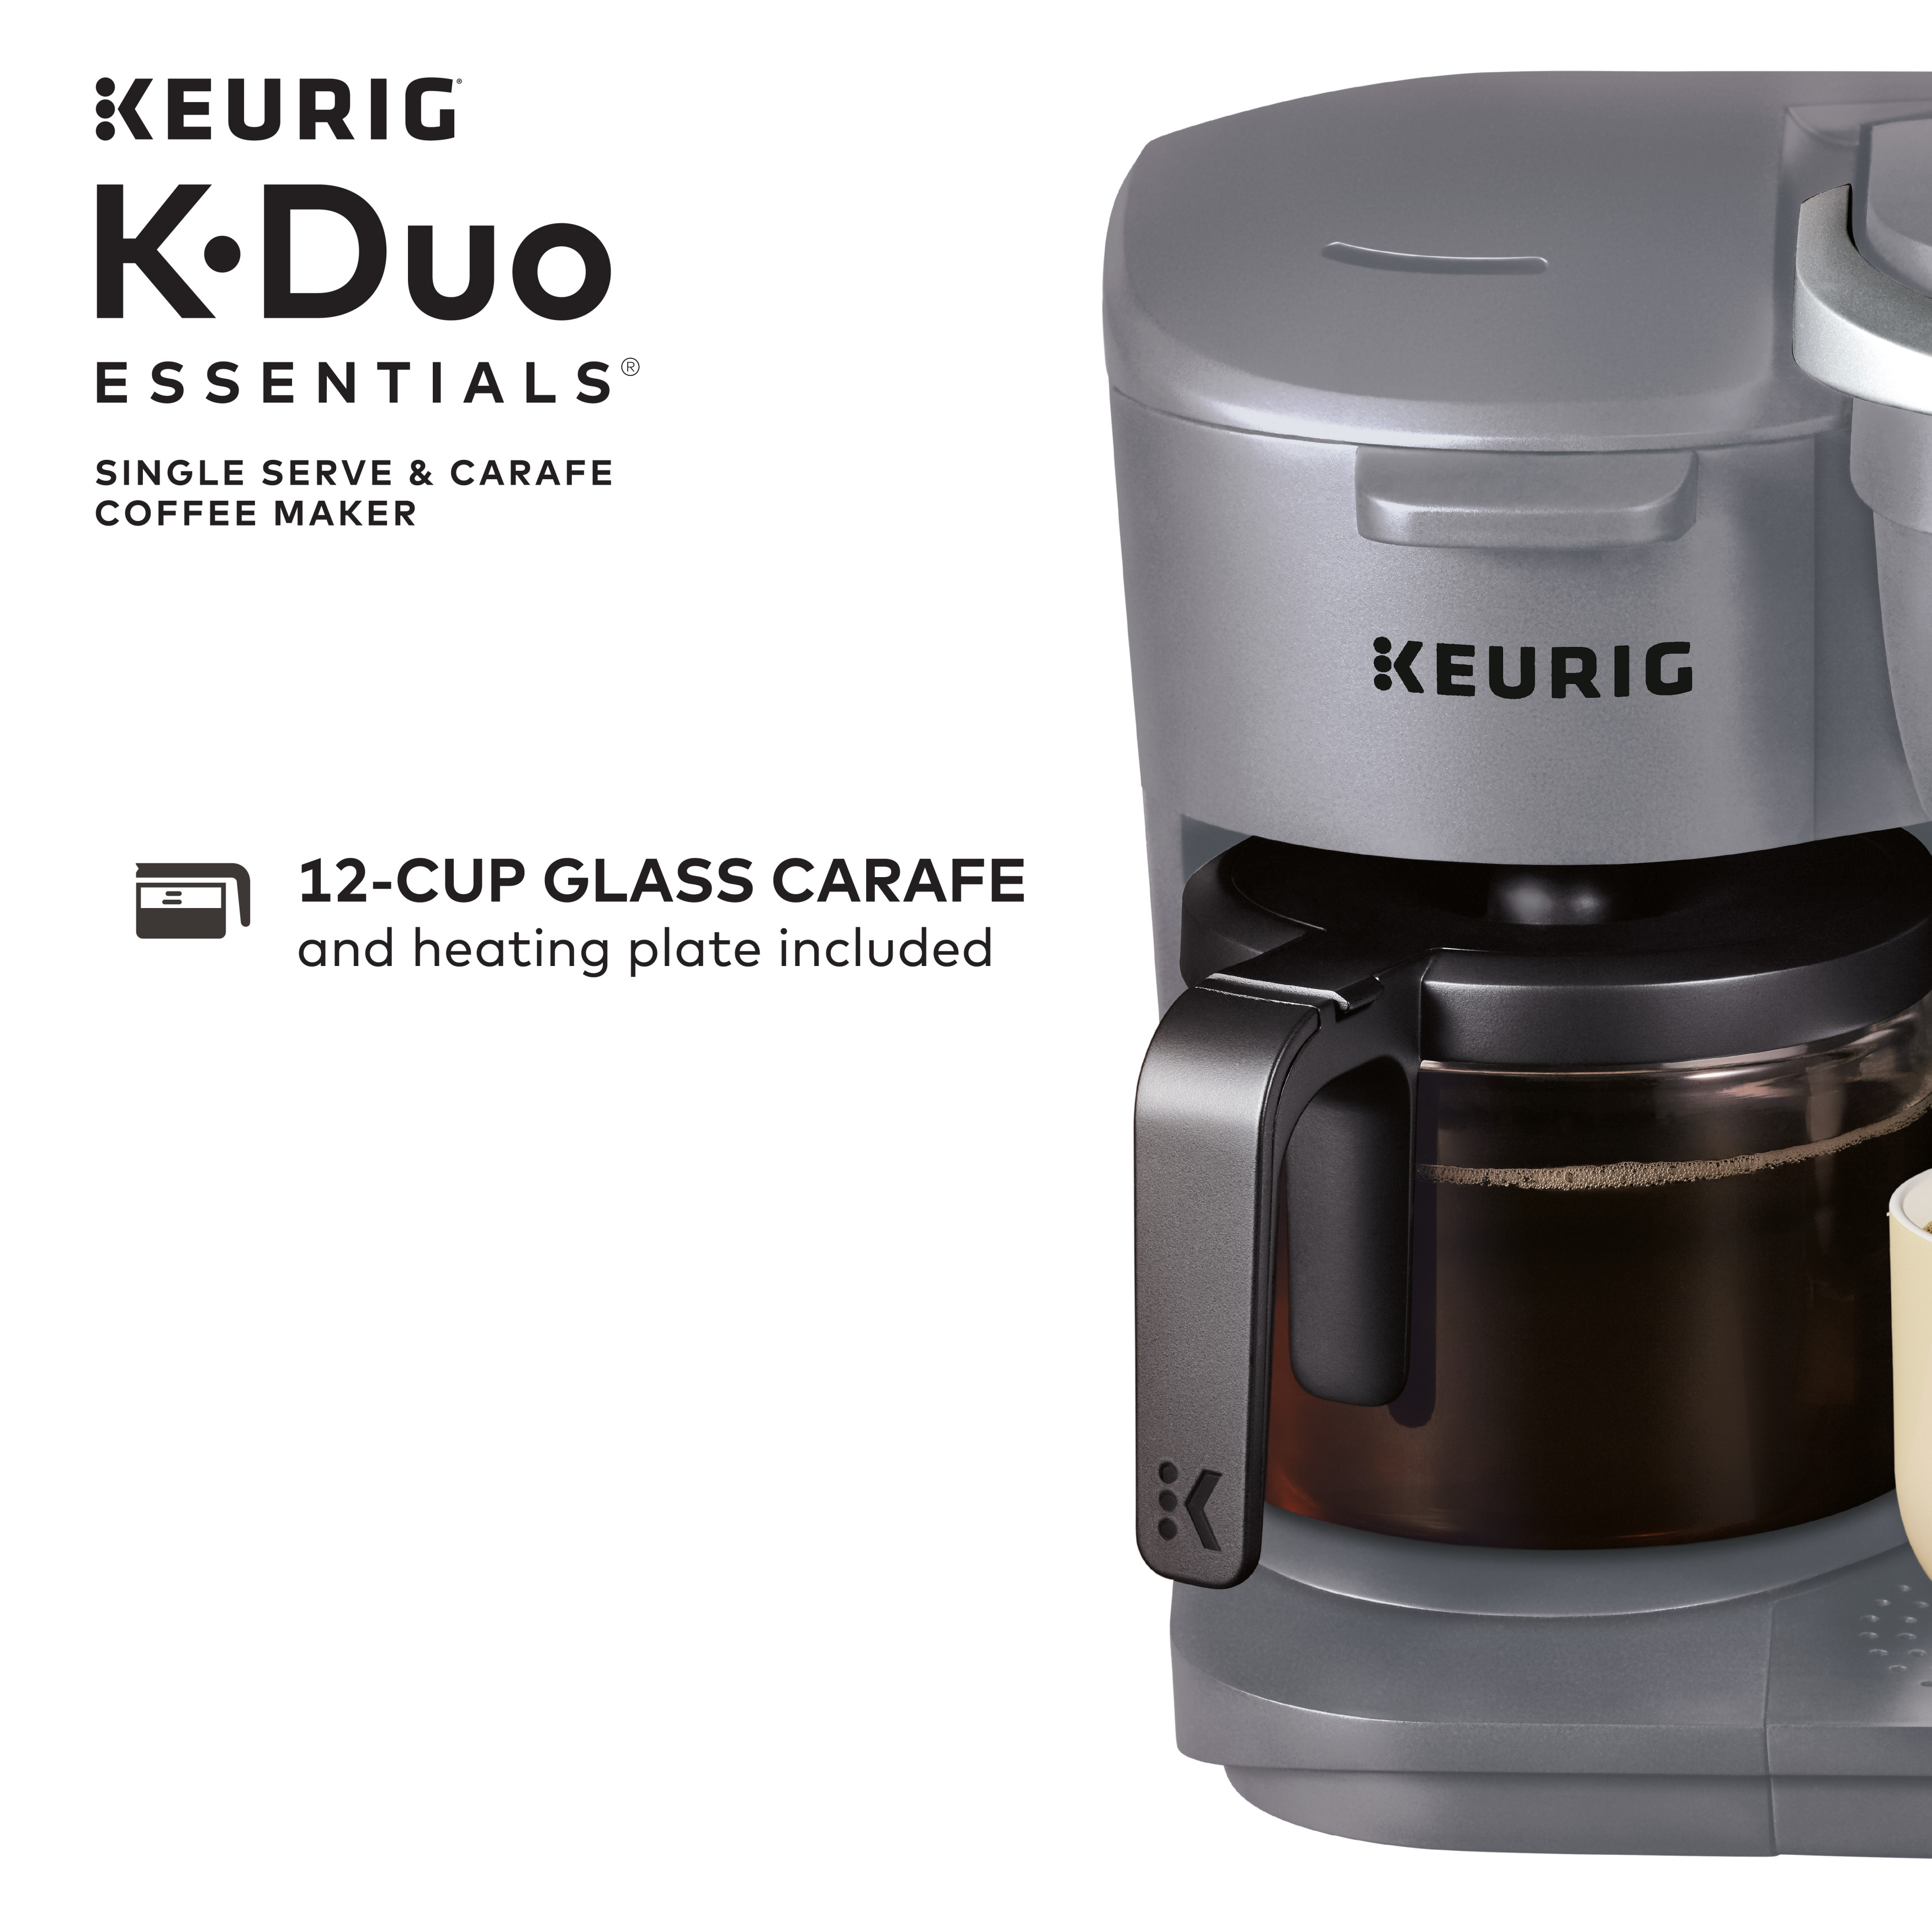 Keurig K-Duo Essentials Moonlight Gray Single-Serve K-Cup Coffee Maker - image 5 of 12